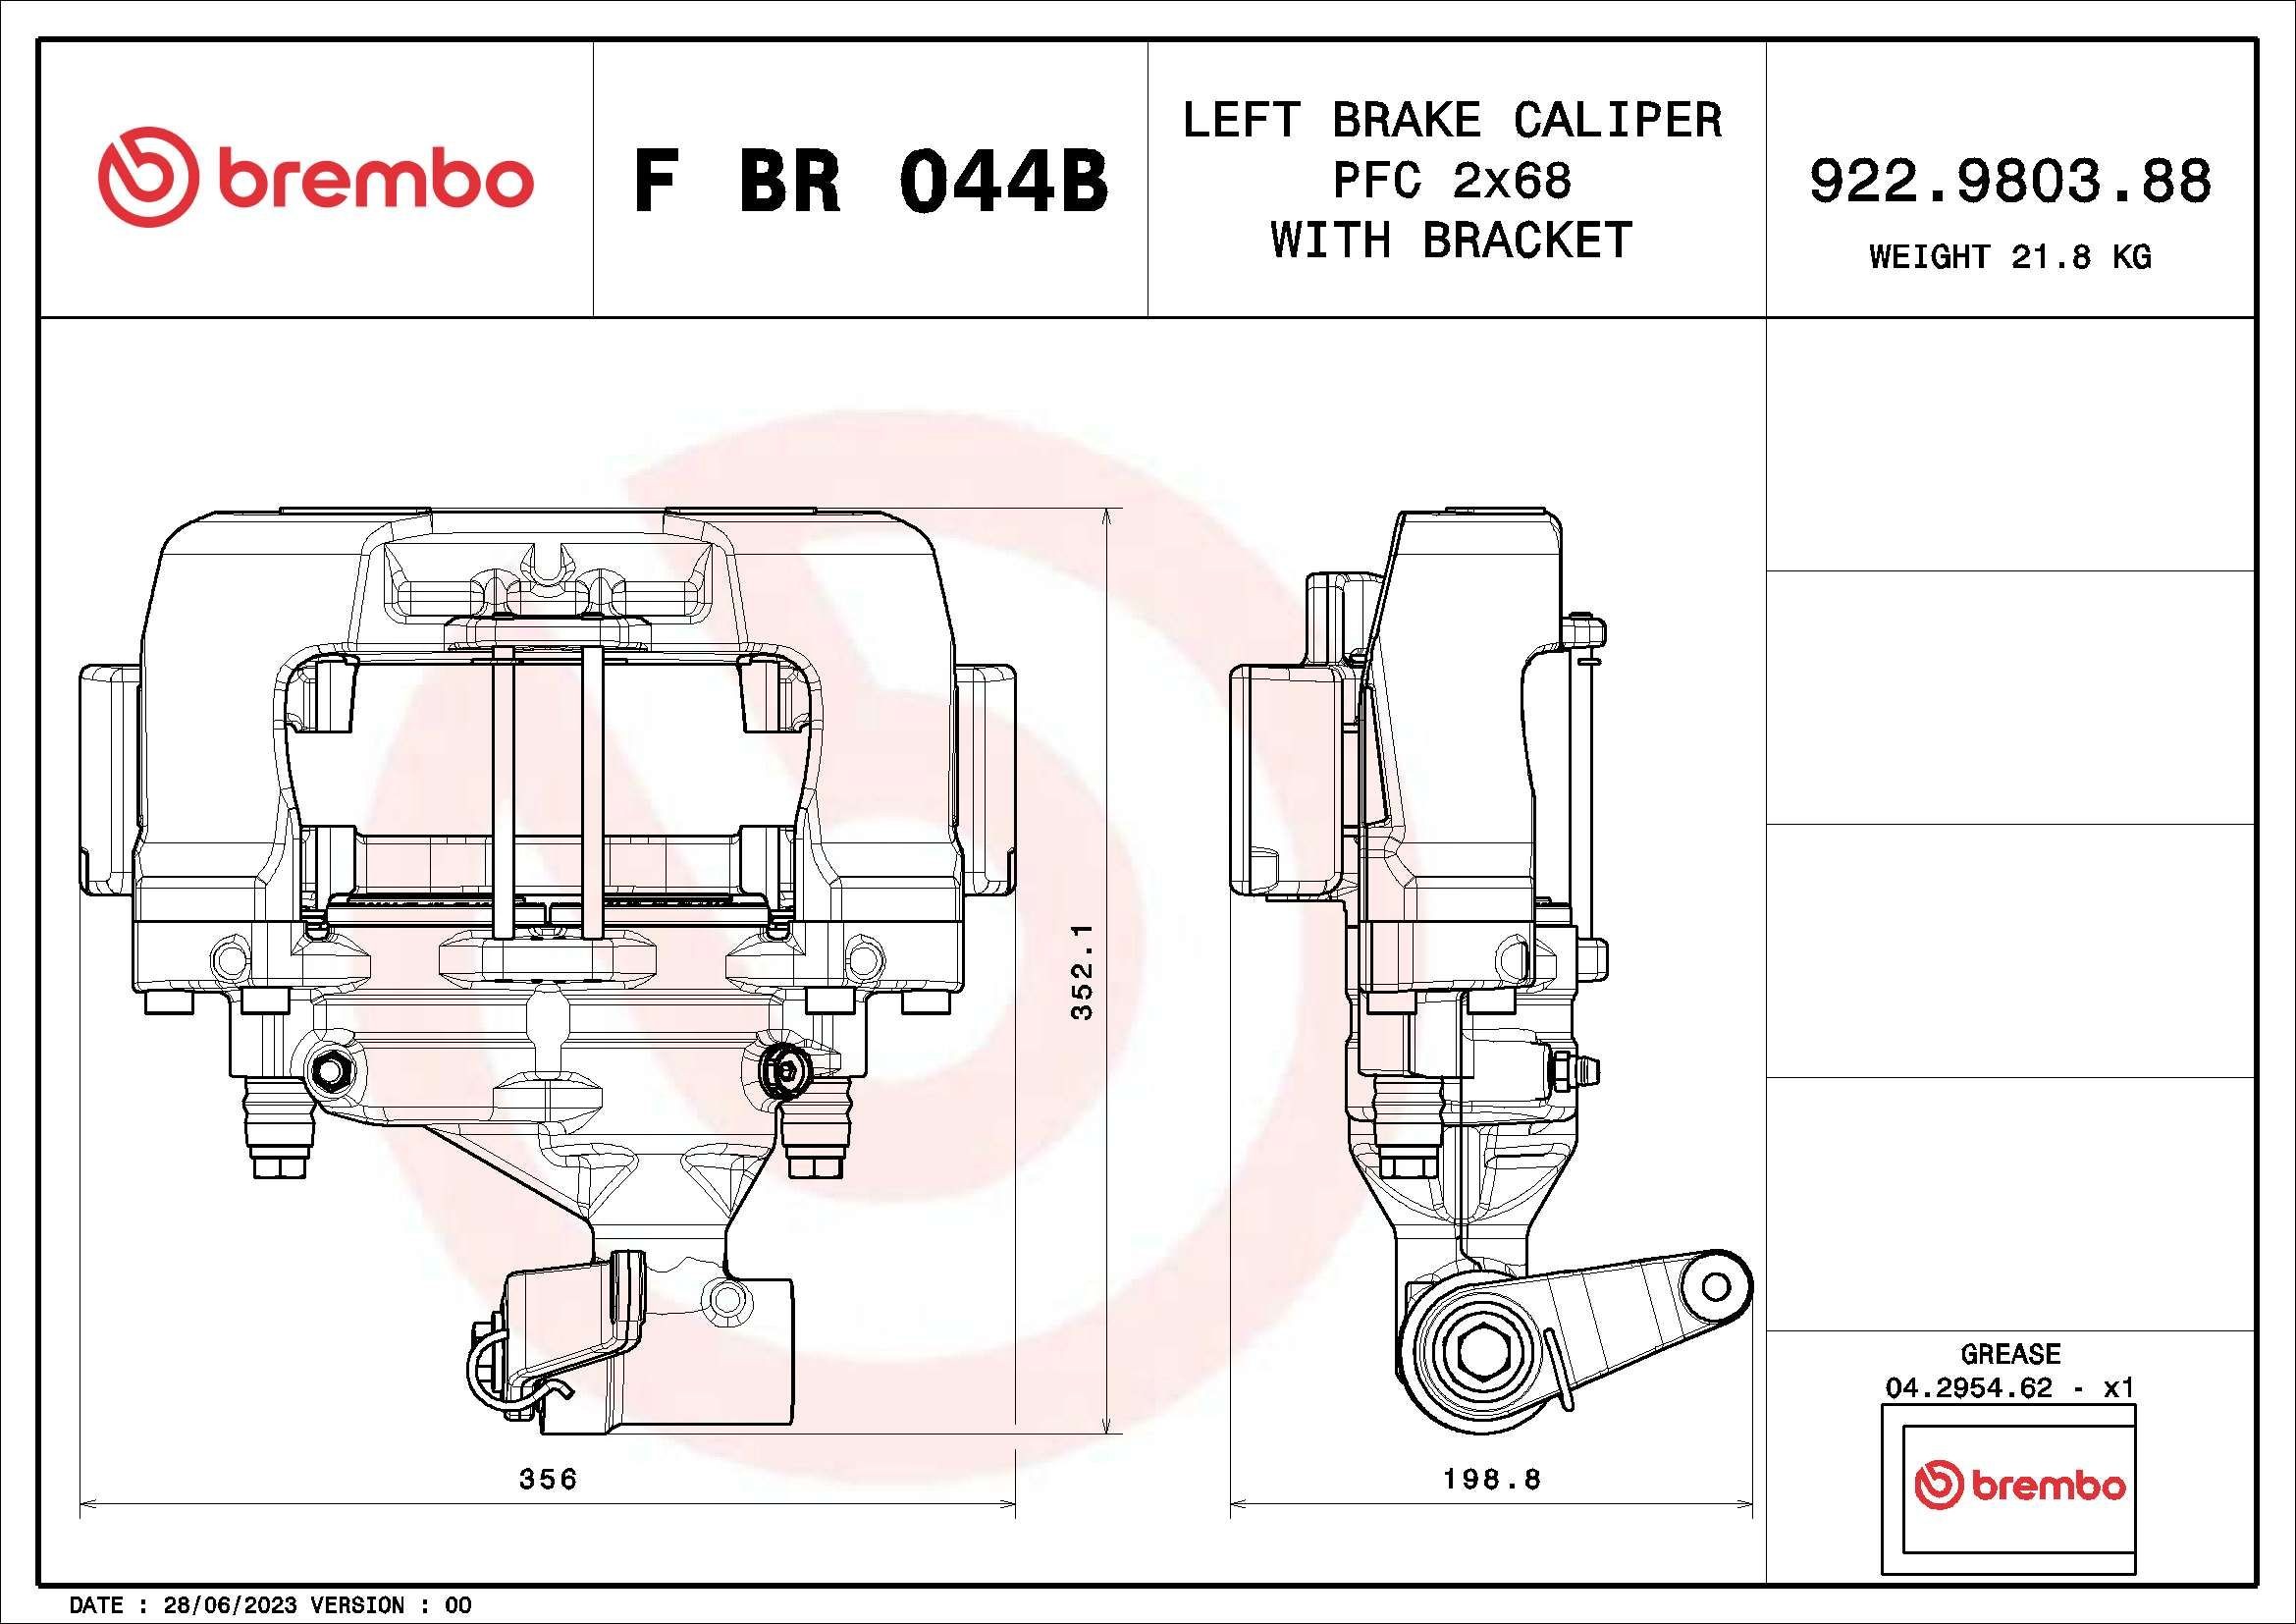 BREMBO Calipers F BR 044B